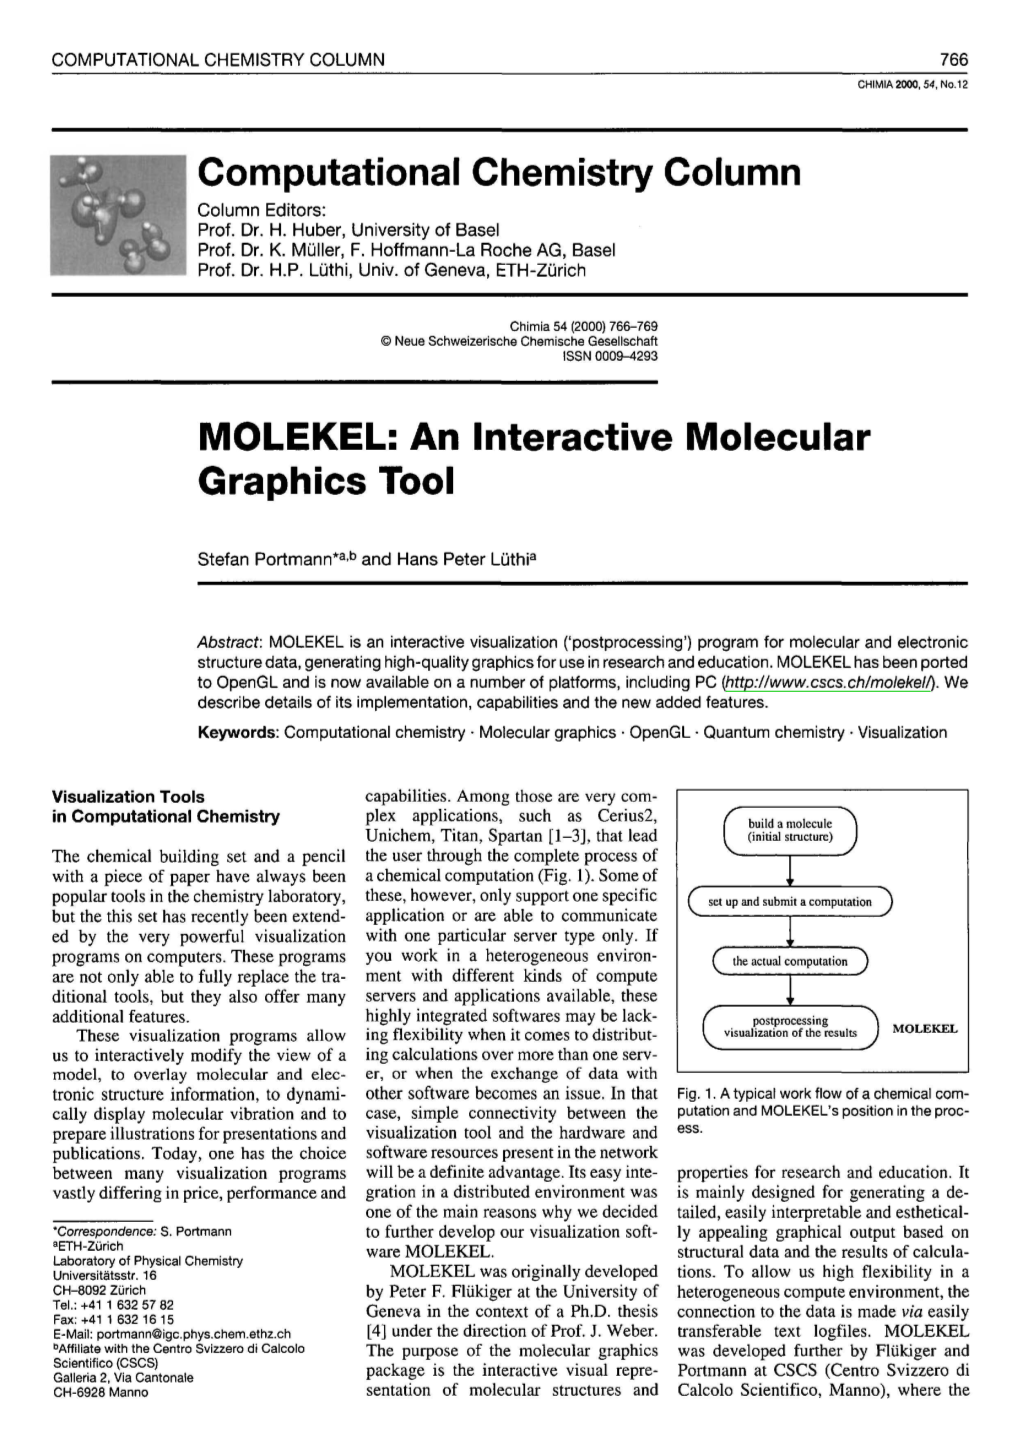 MOLEKEL: an Interactive Molecular Graphics Tool